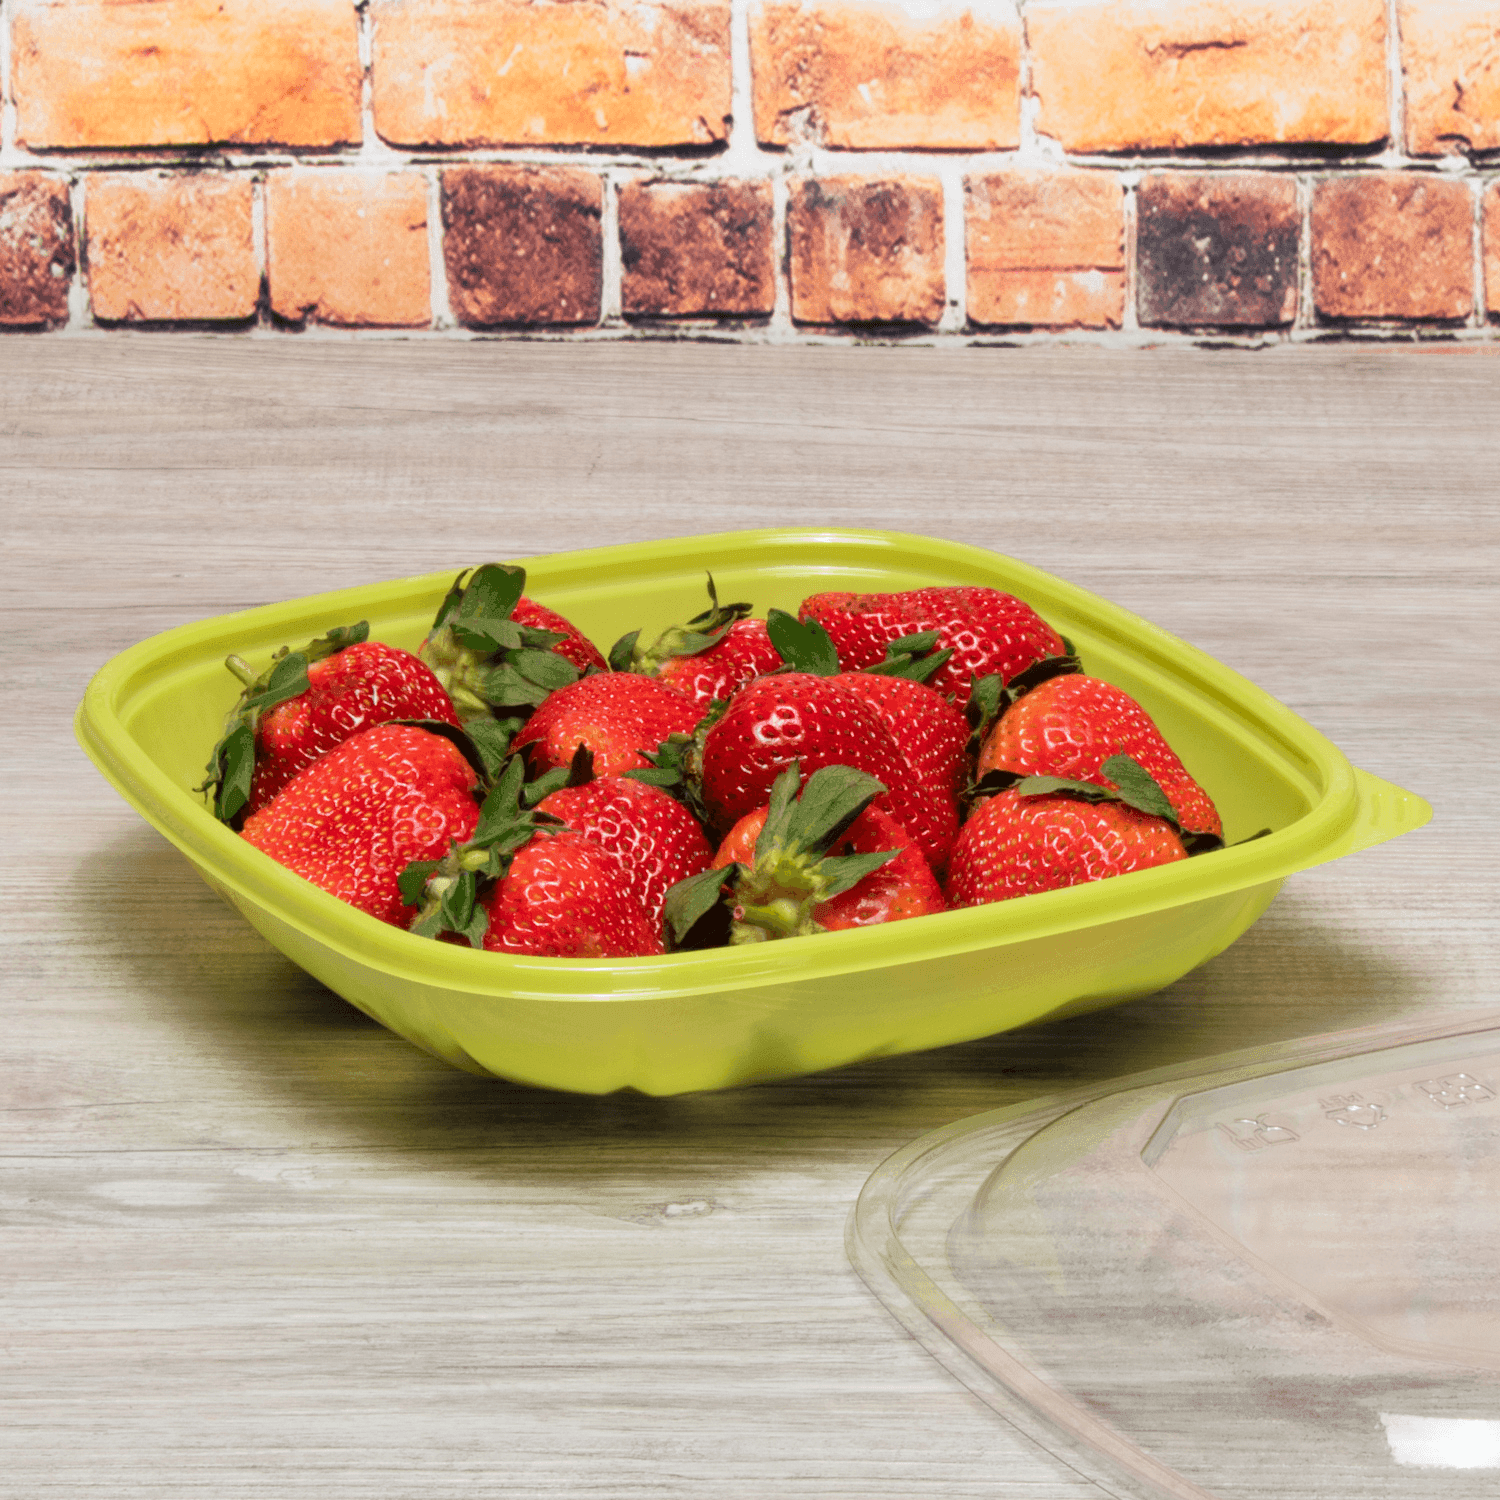 Green Karat 24oz PET Square Bowl with strawberries